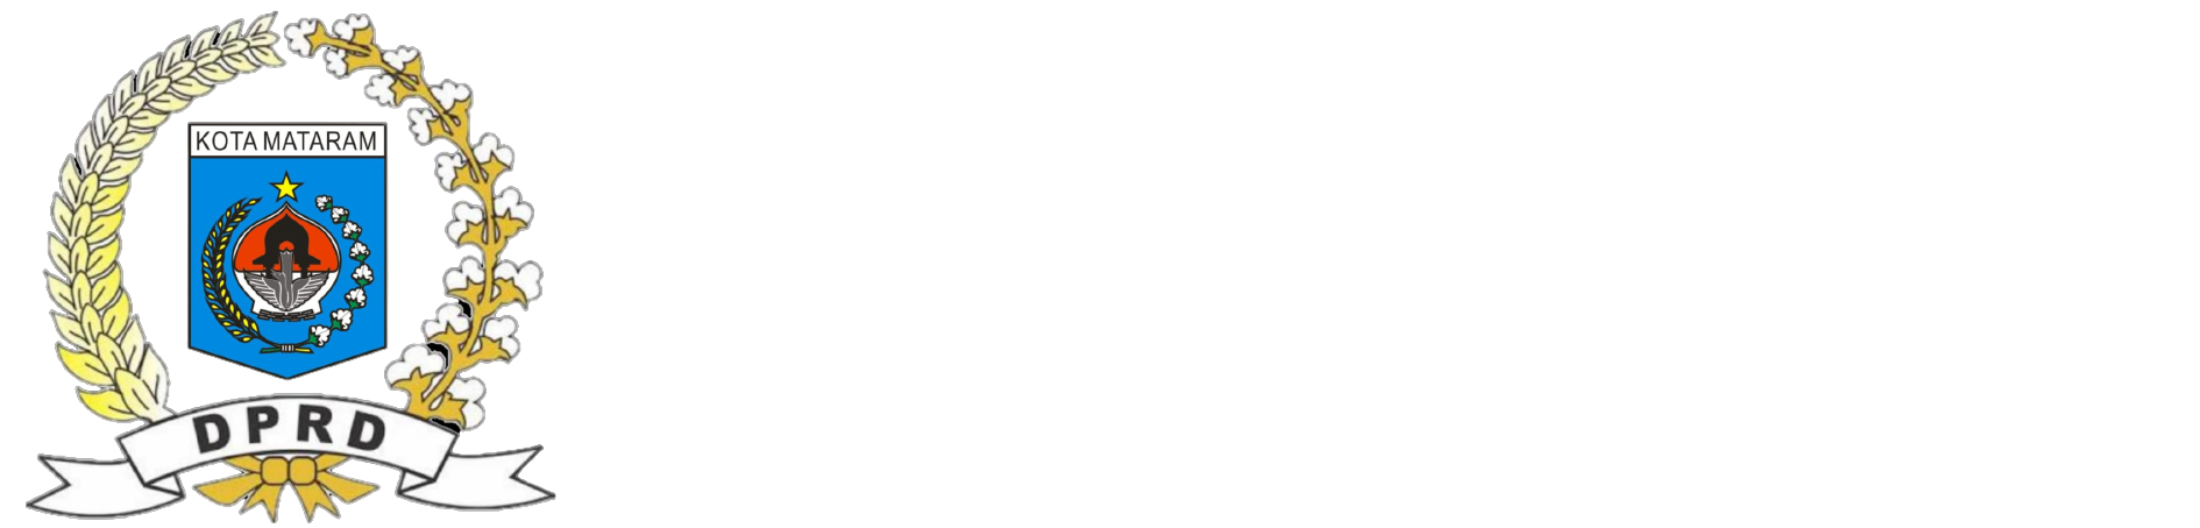 Dewan Perwakilan Rakyat Daerah Kota Mataram